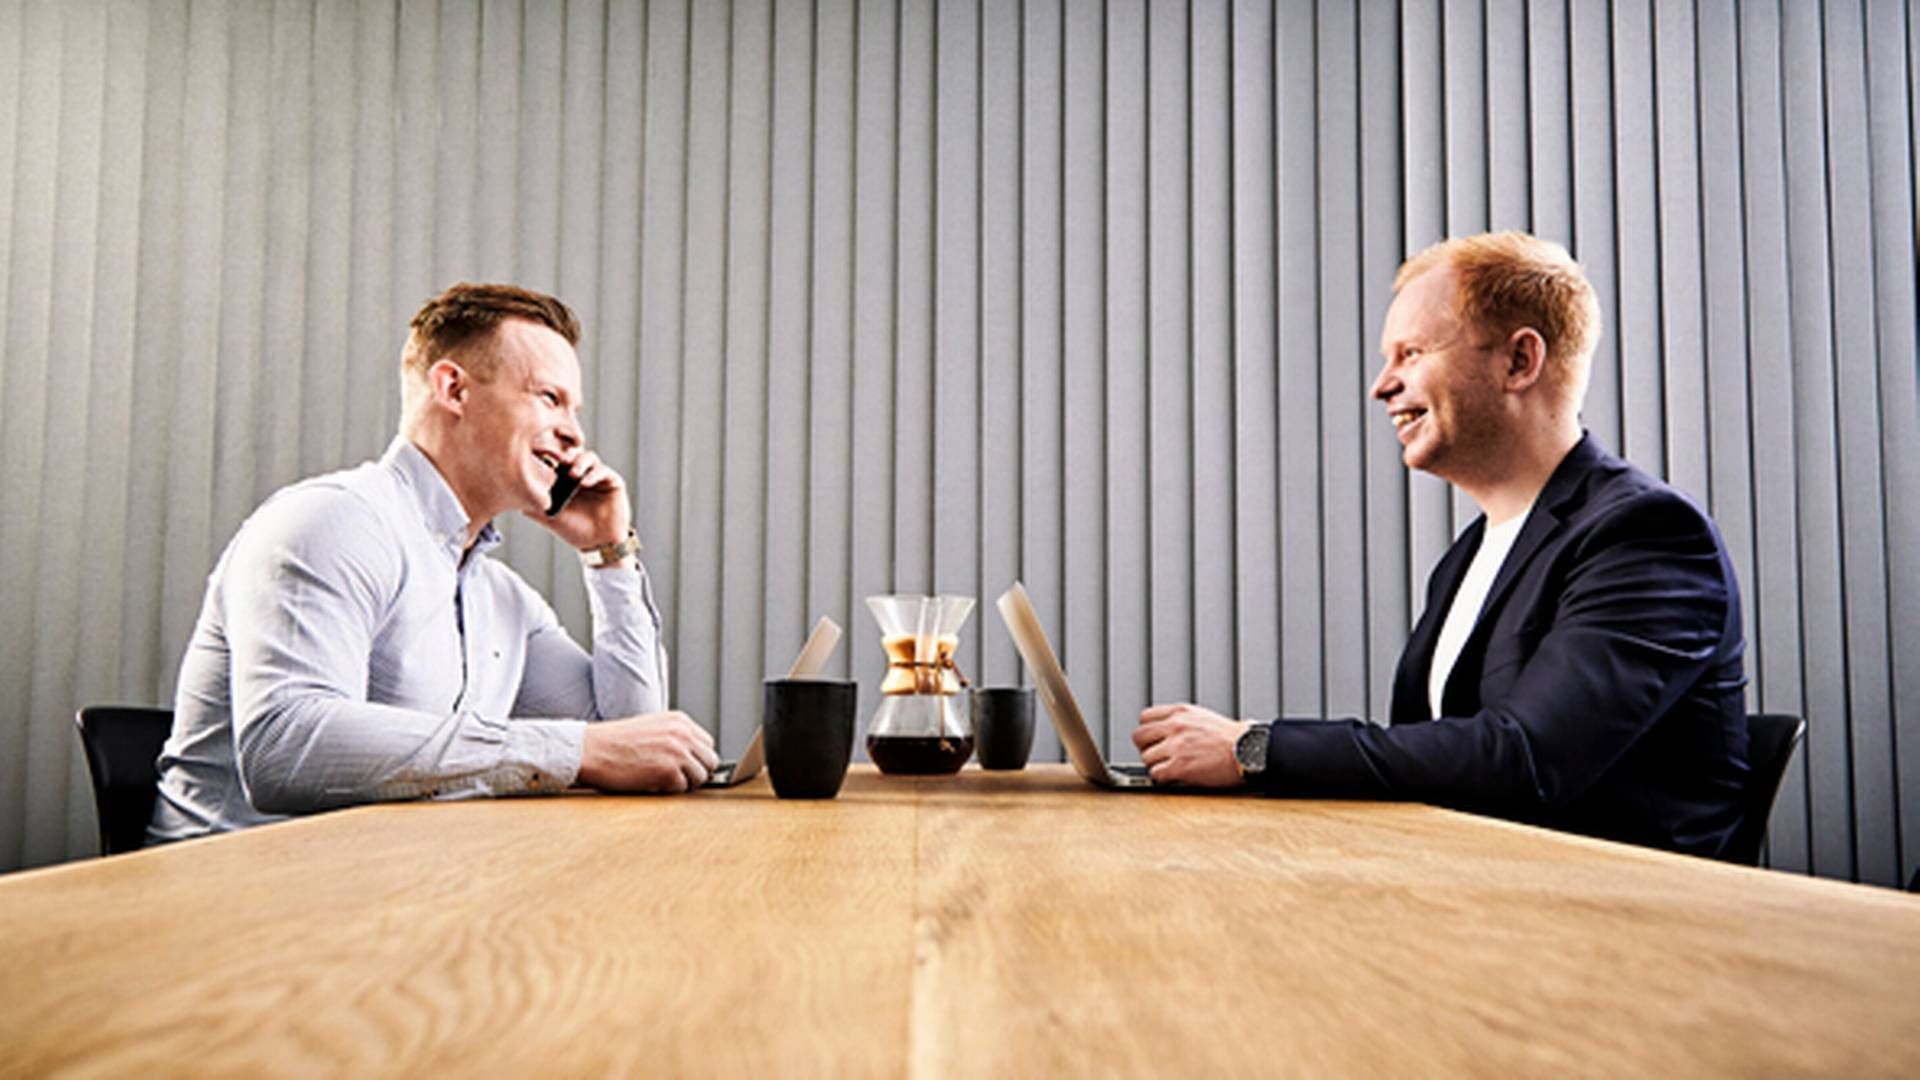 Stifterne Jacob Bülov Espensen (tv) og Christoffer Tellefsen (th). | Foto: Chefmade/PR